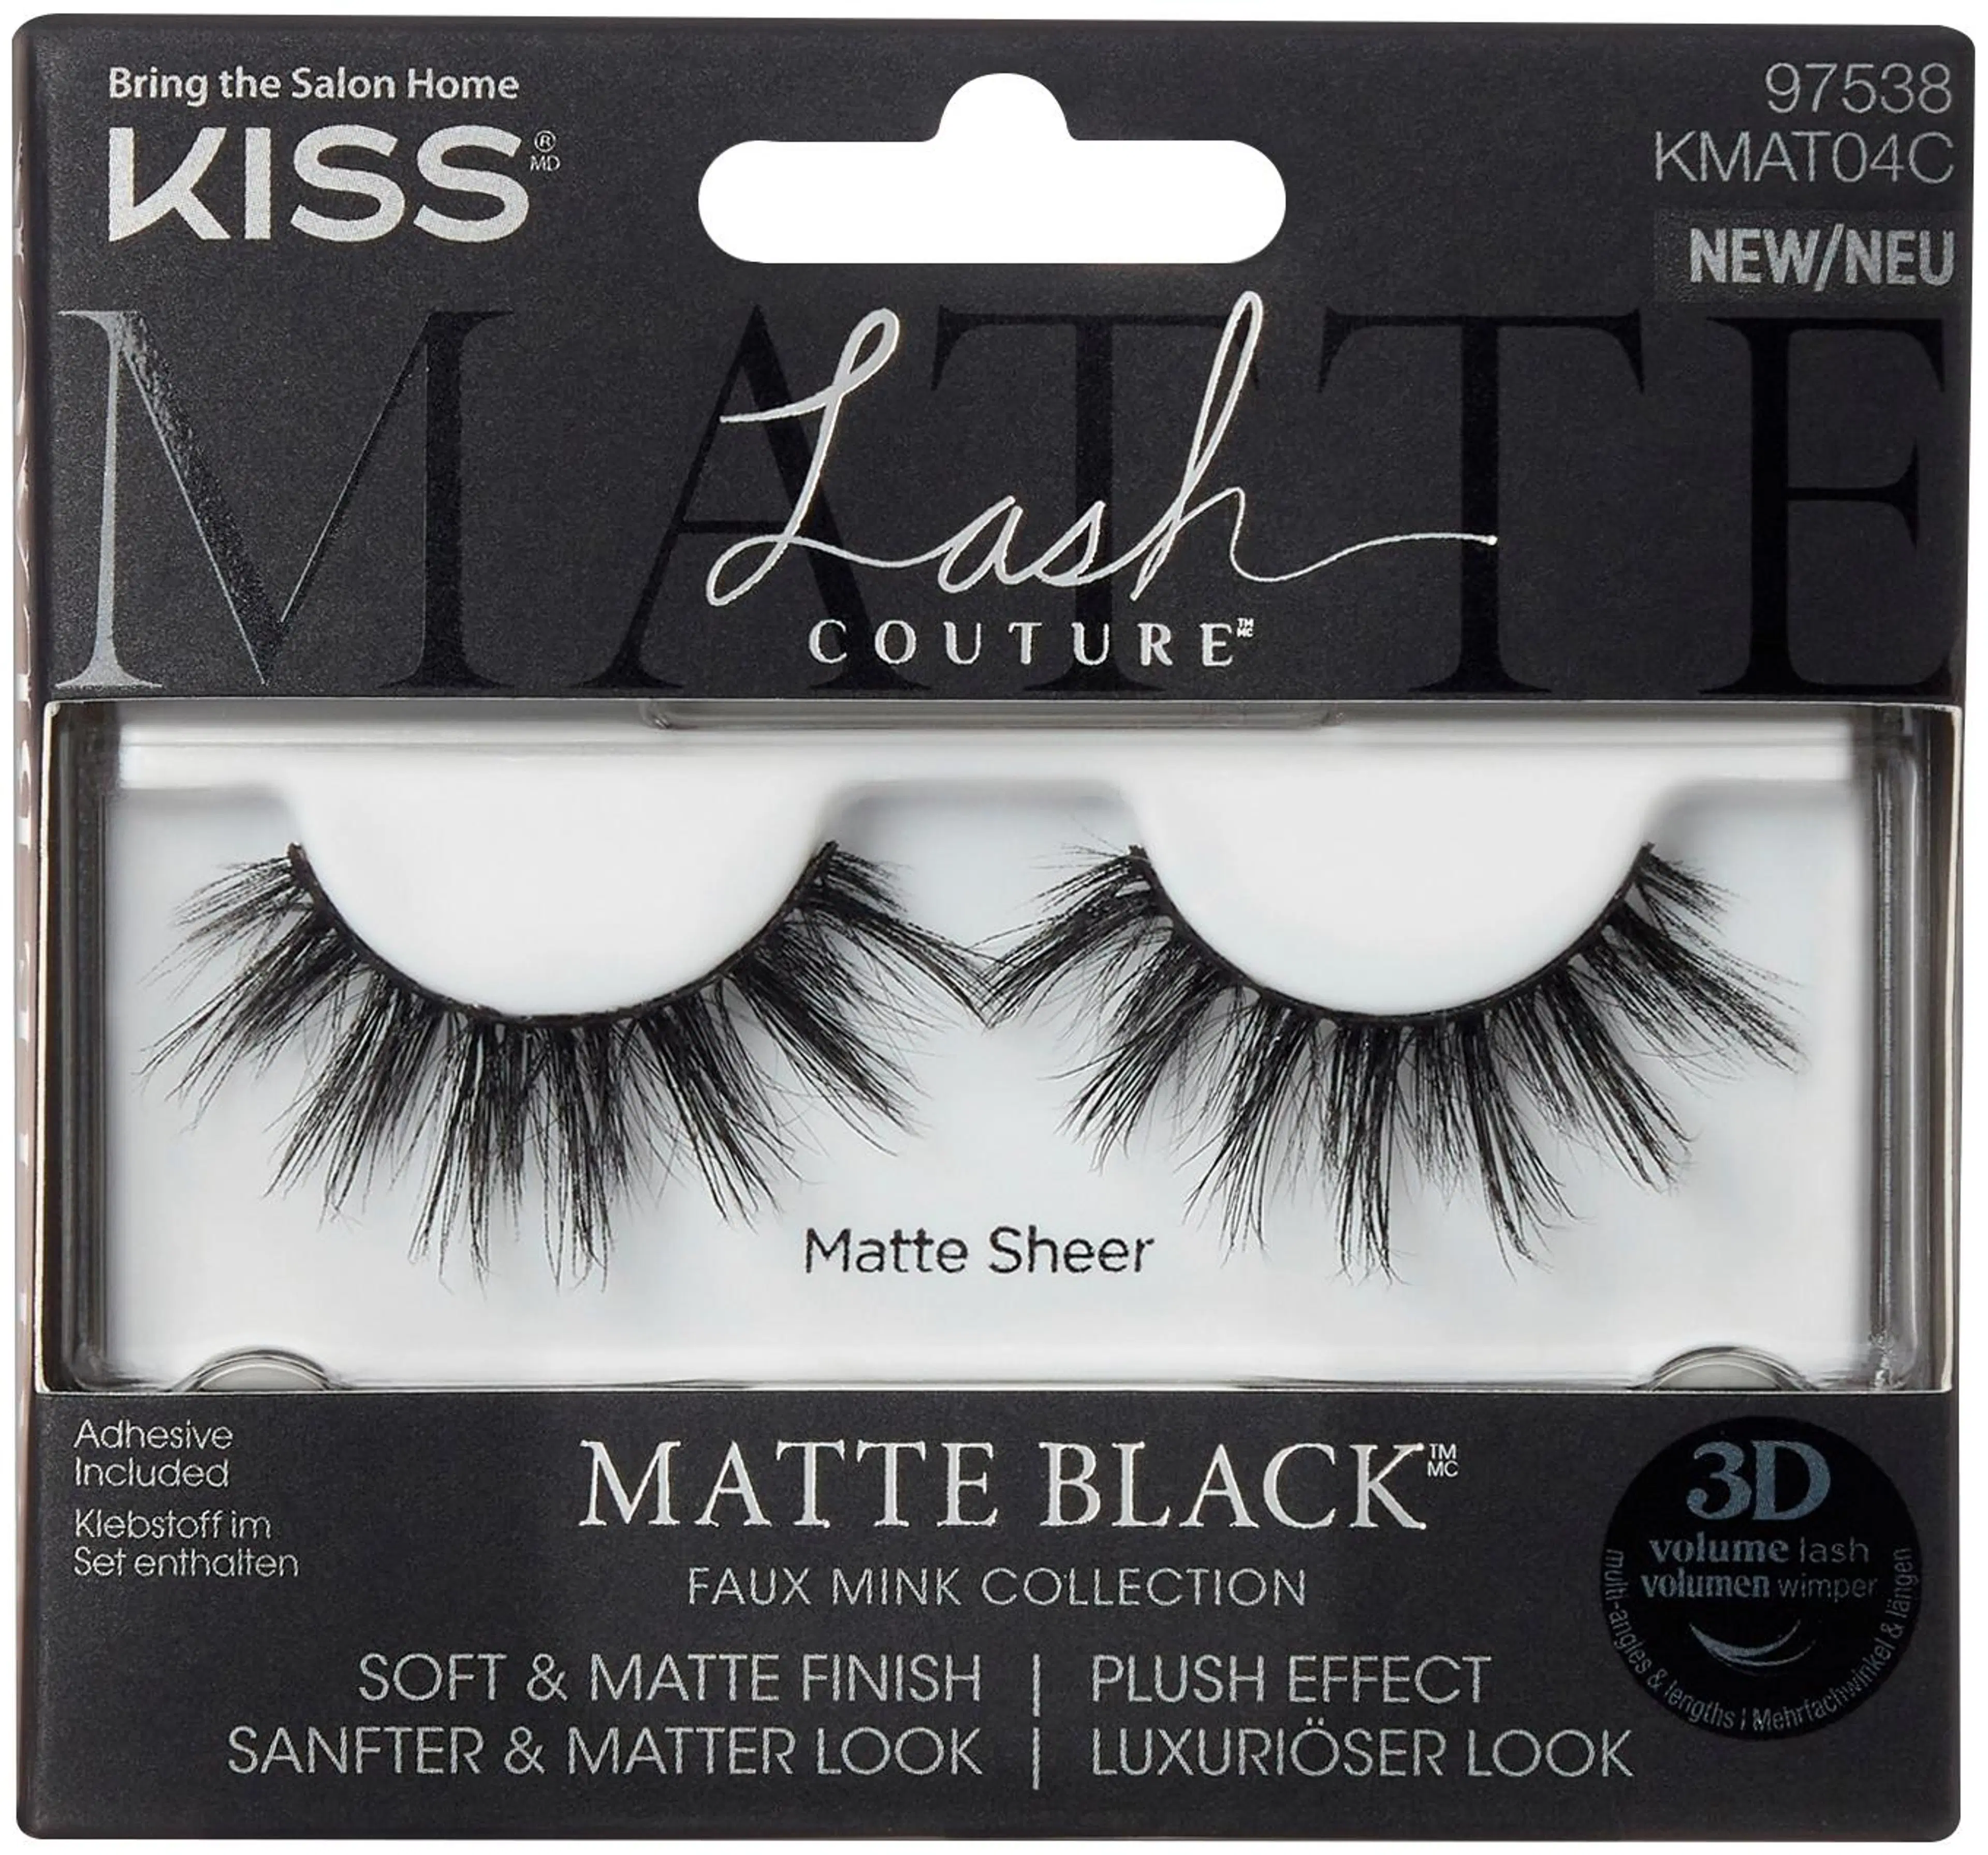 Kiss Lash Couture Matte Black irtoripset, Sheer 1pari